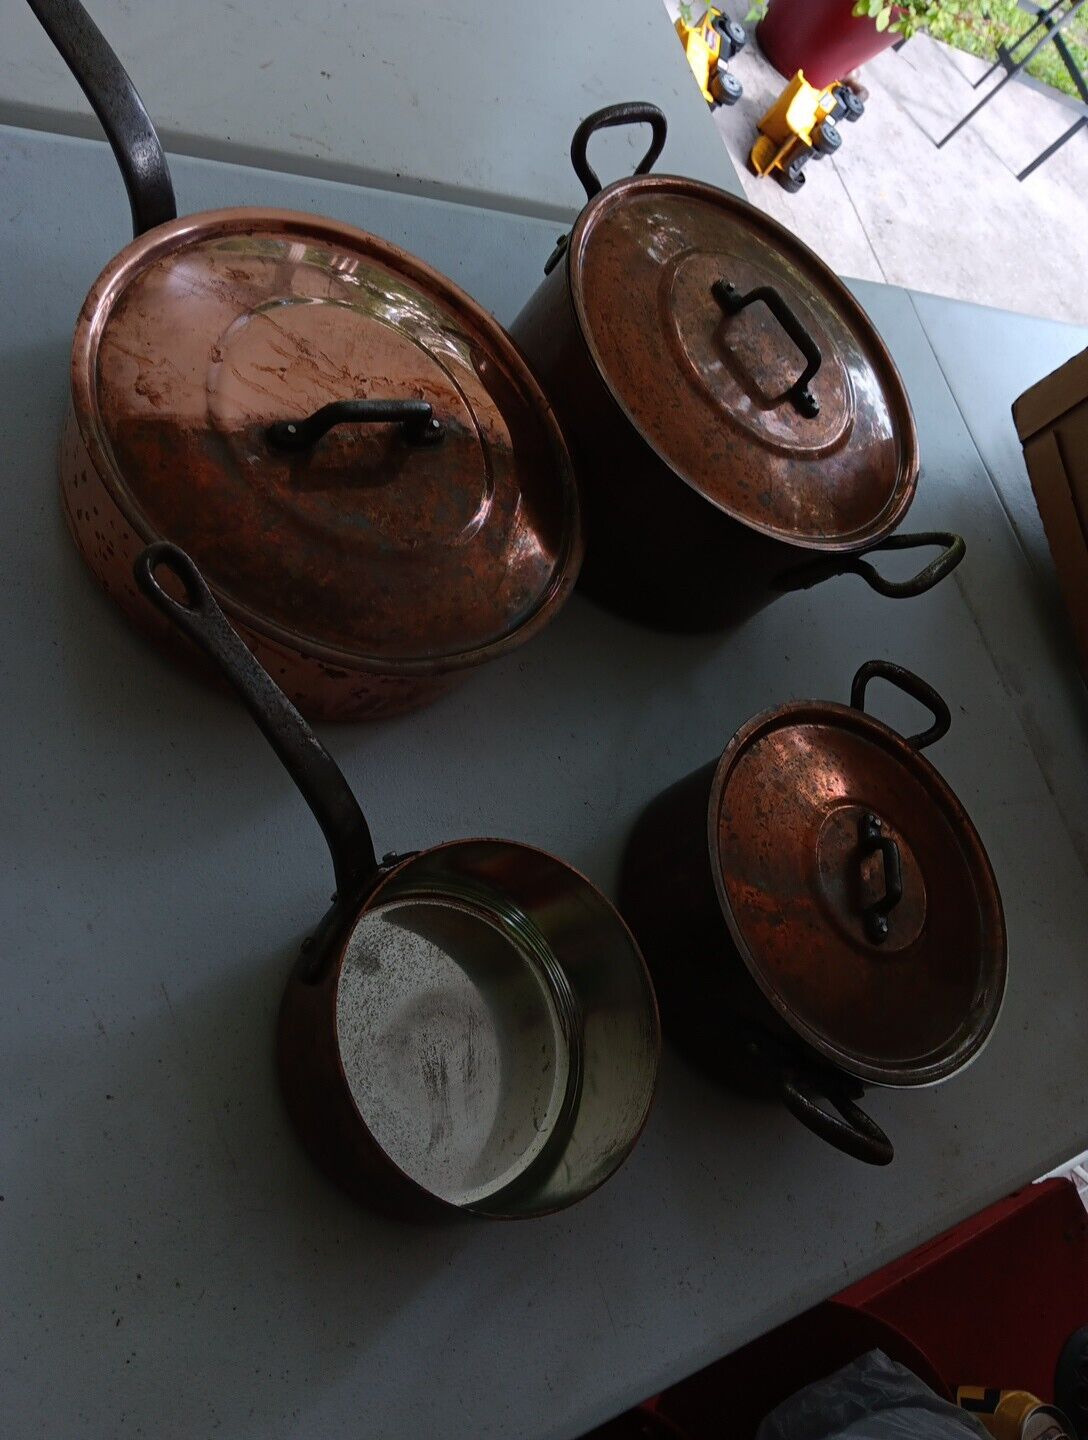 7 Piece Set Vintage French Copper Coated Pans 4-Pans 3-Lids No Mark Lot As Is